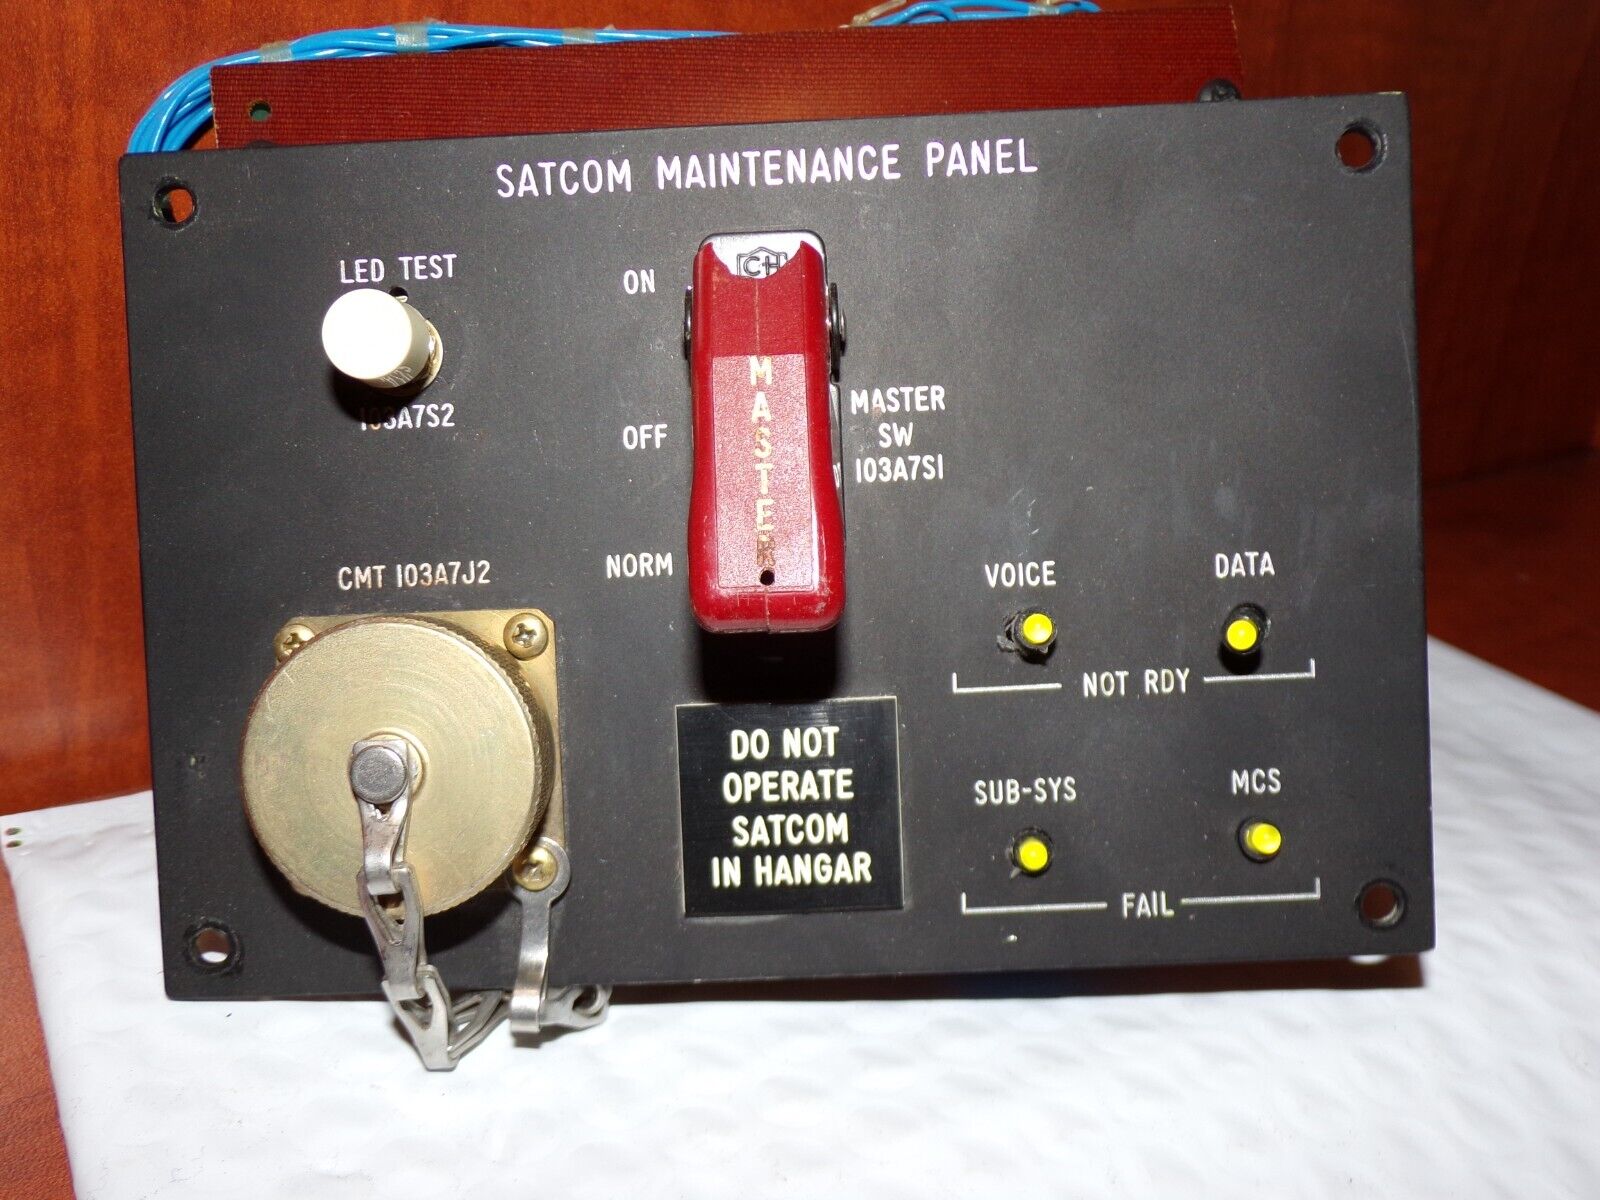 SATCOM Maintenance Panel w/ Red Master Switch